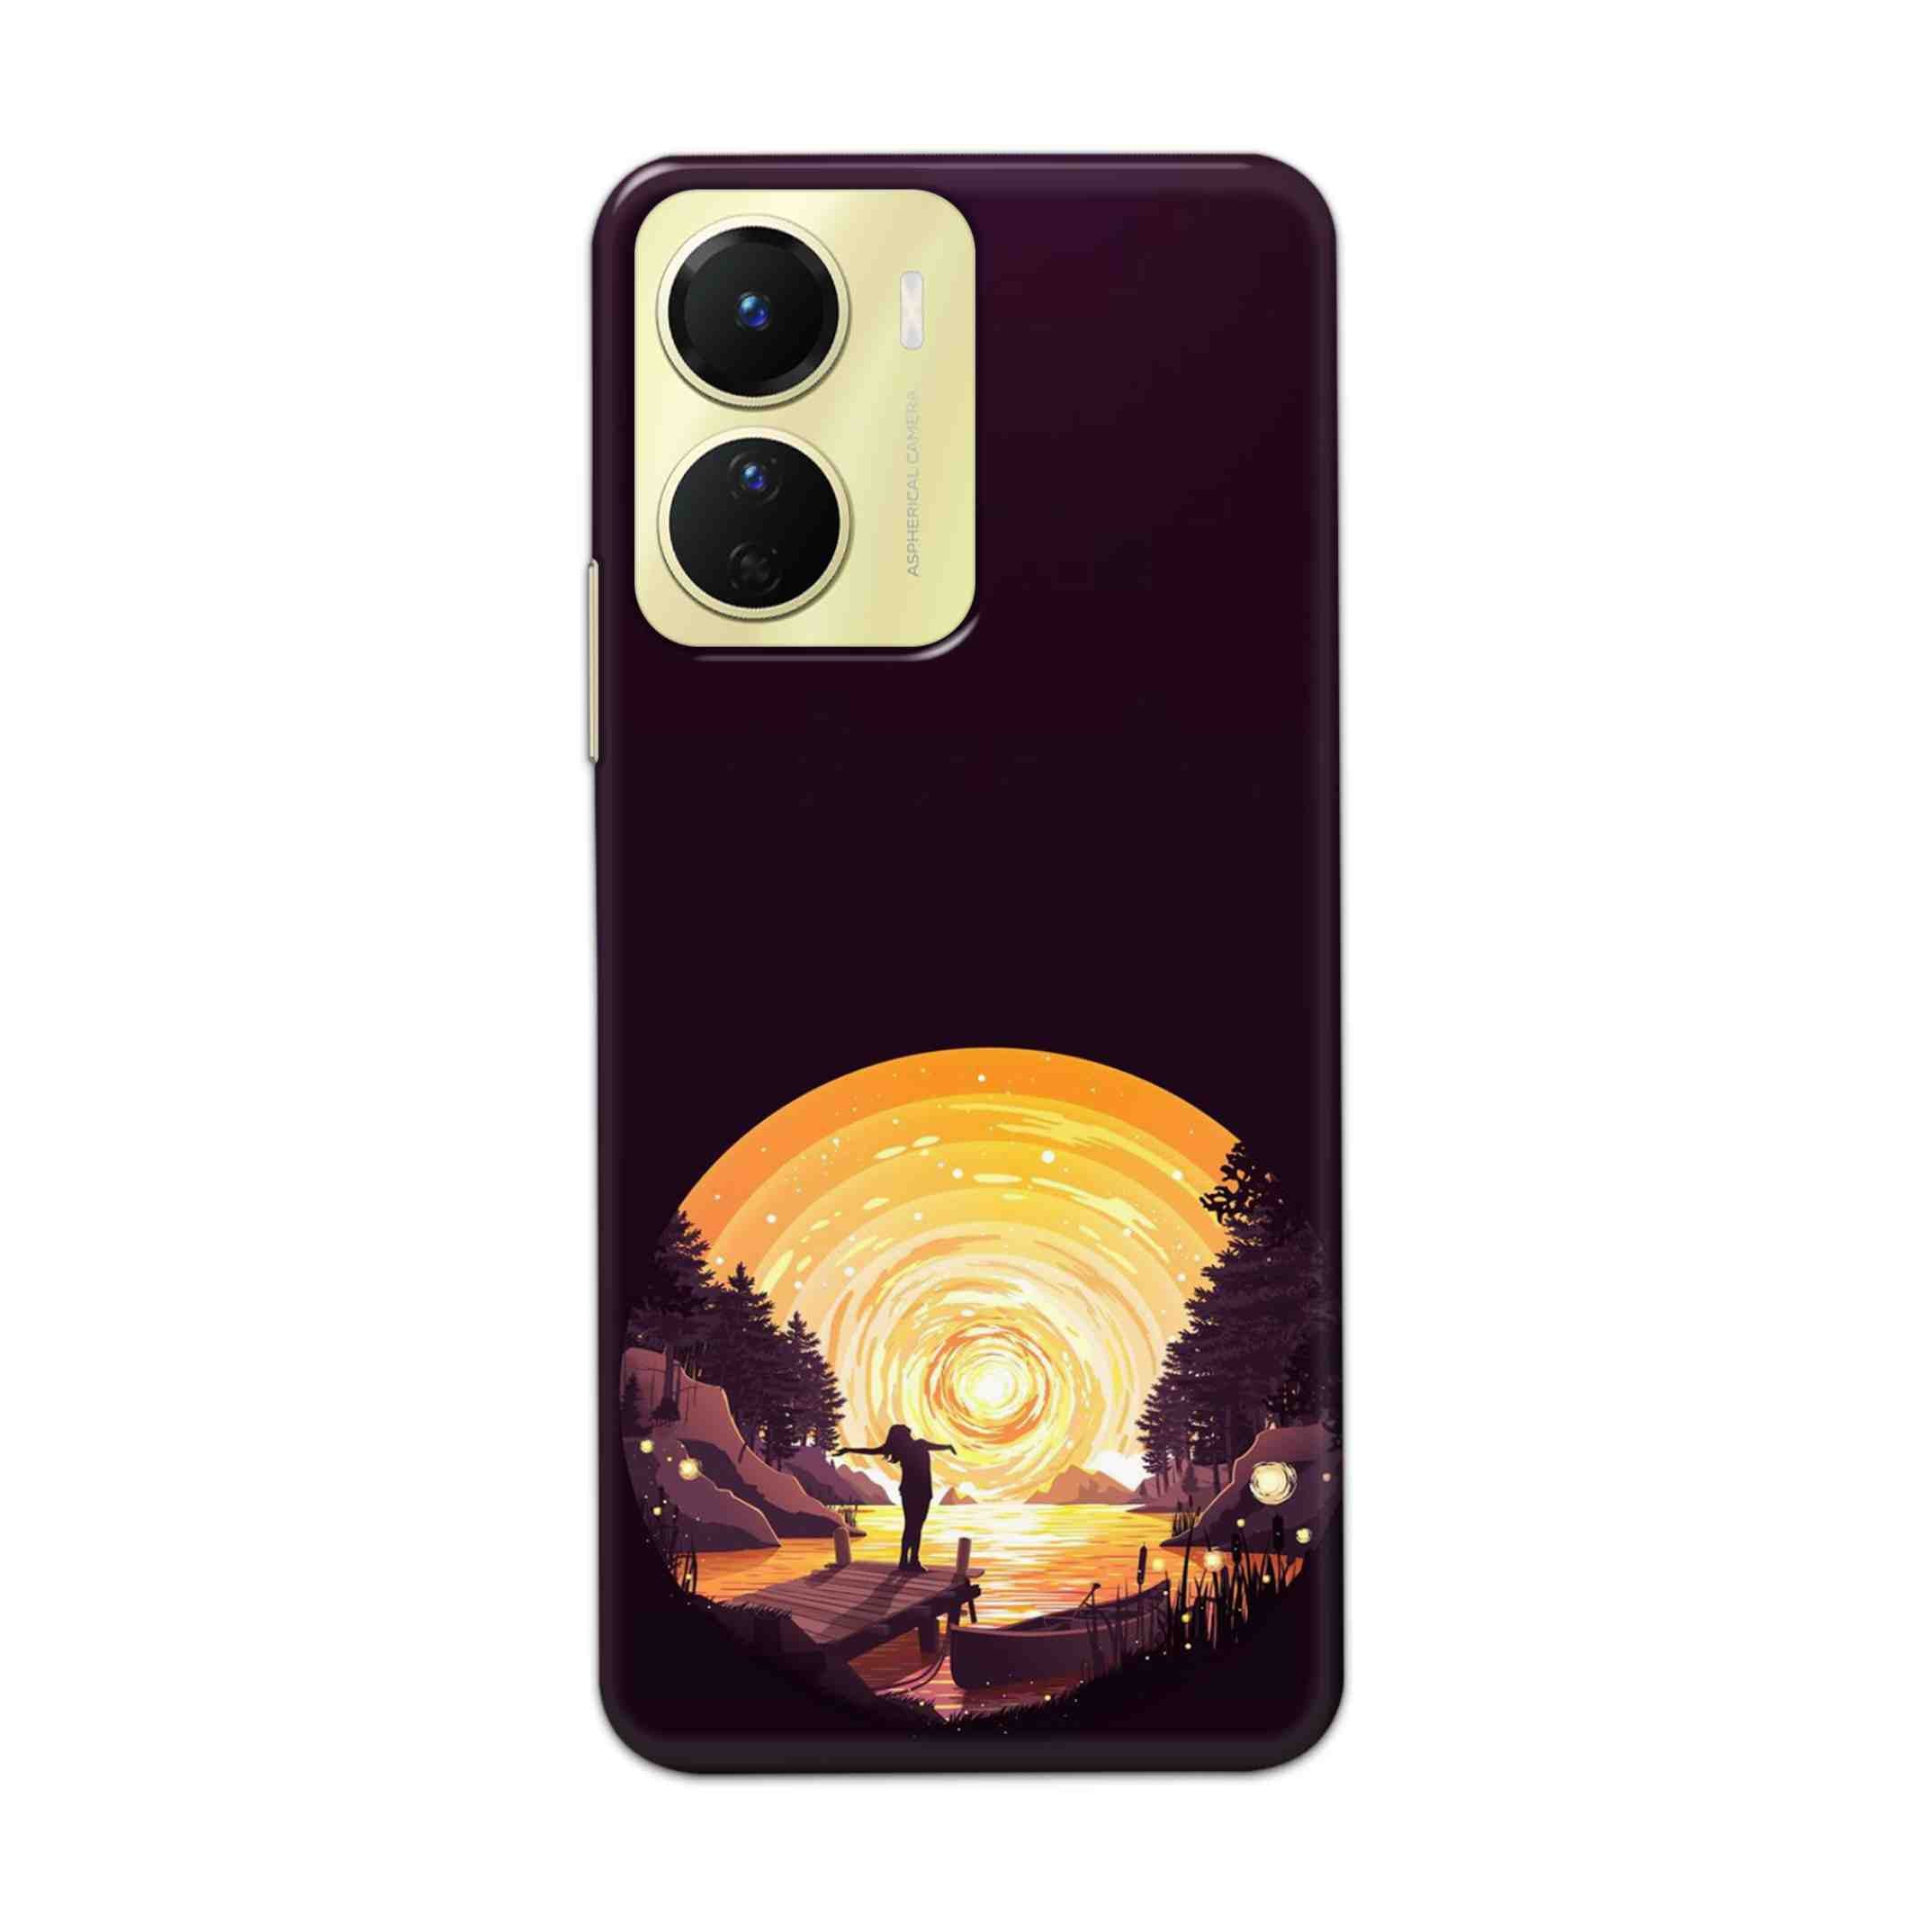 Buy Night Sunrise Hard Back Mobile Phone Case Cover For Vivo Y16 Online